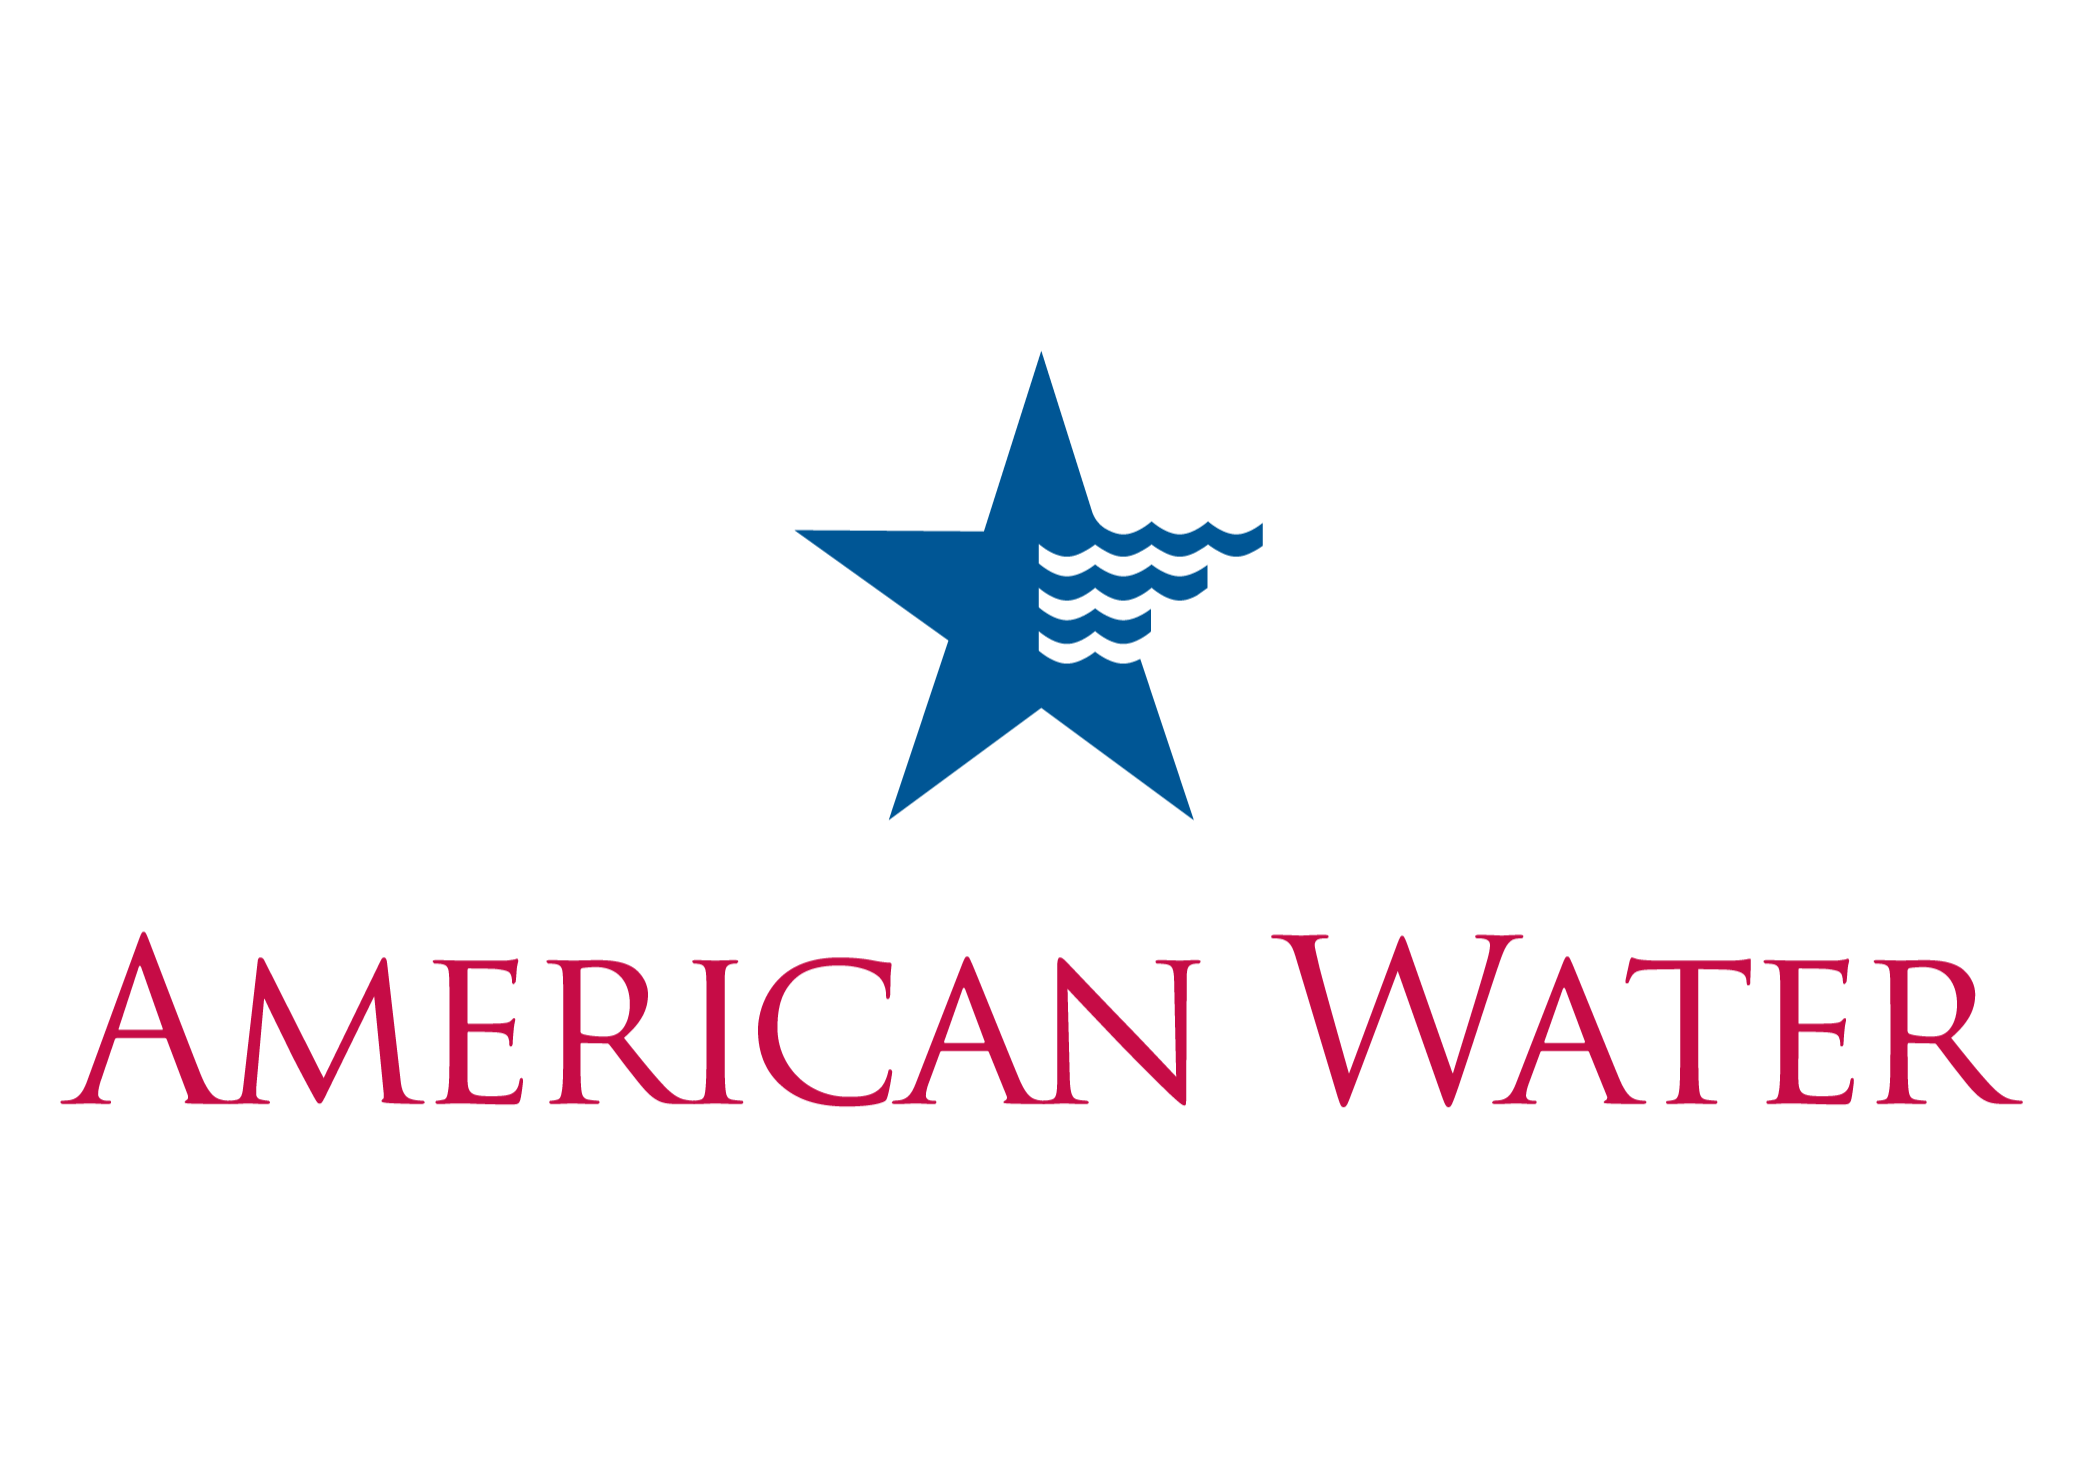 American Water logo